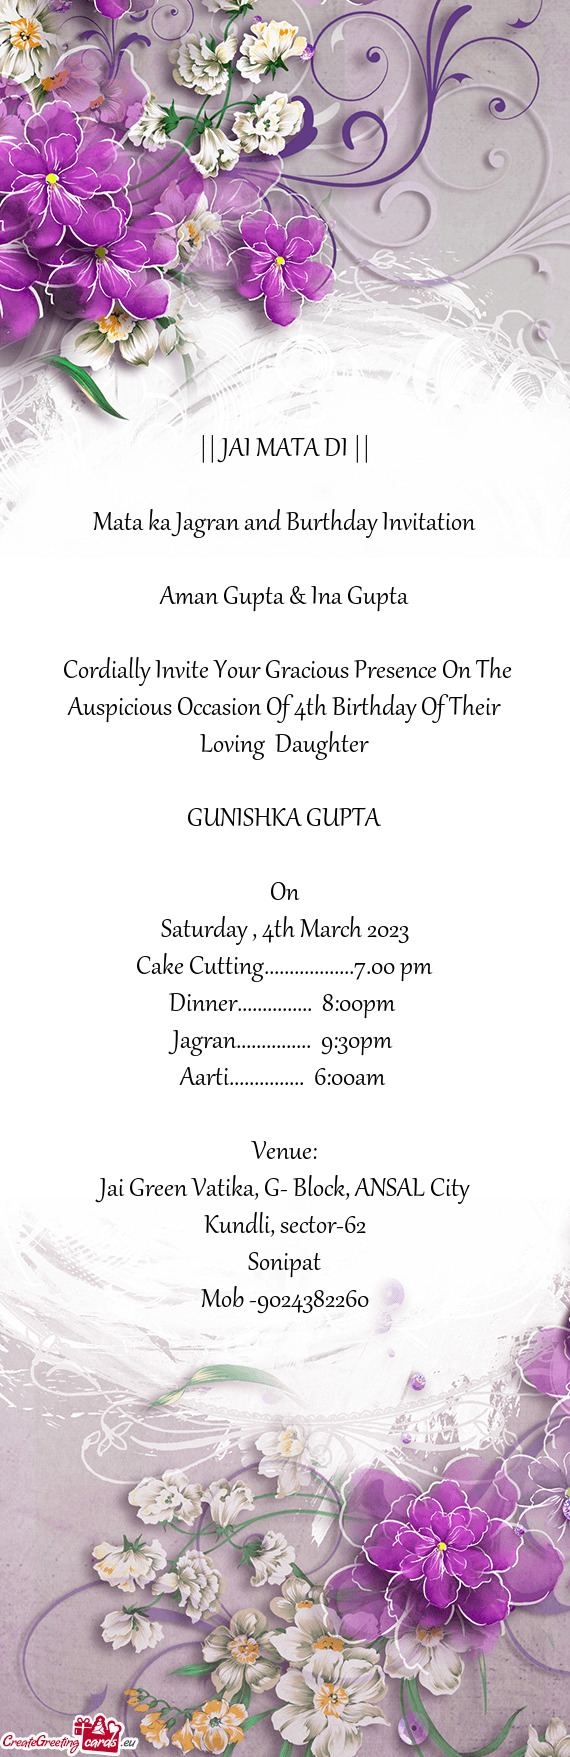 Mata ka Jagran and Burthday Invitation